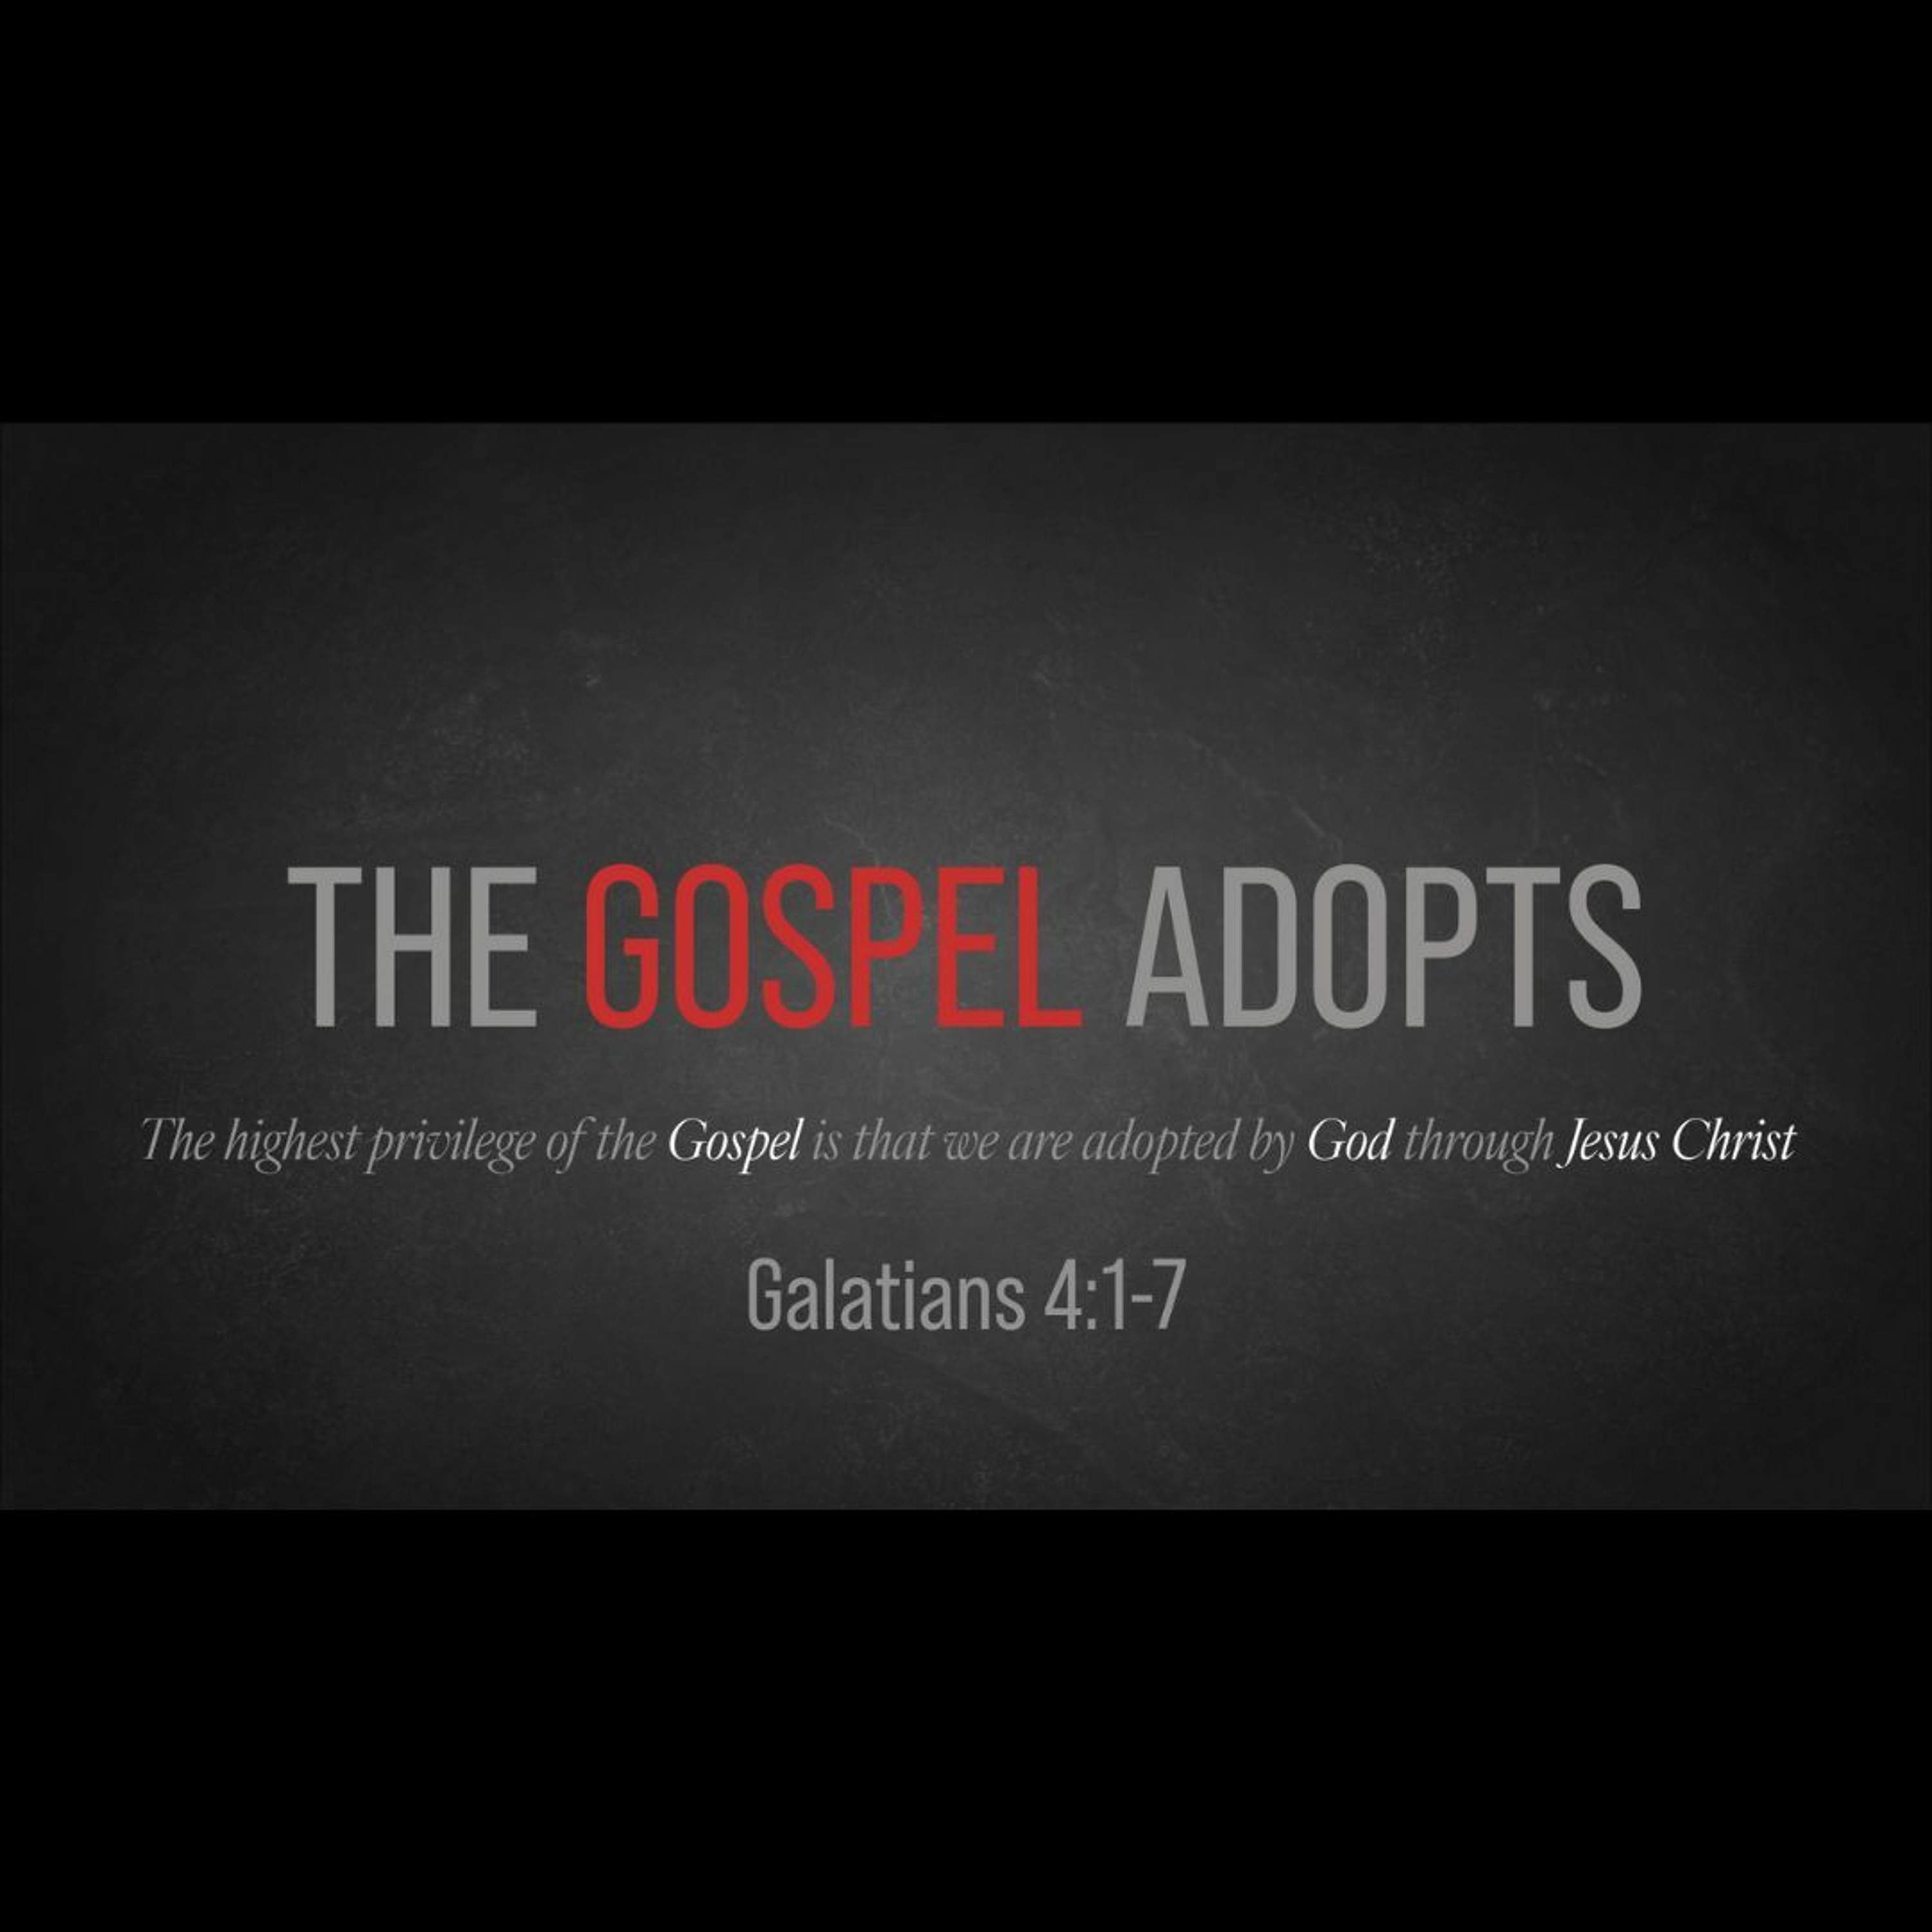 The Gospel Adopts (Galatians 4:1-7)